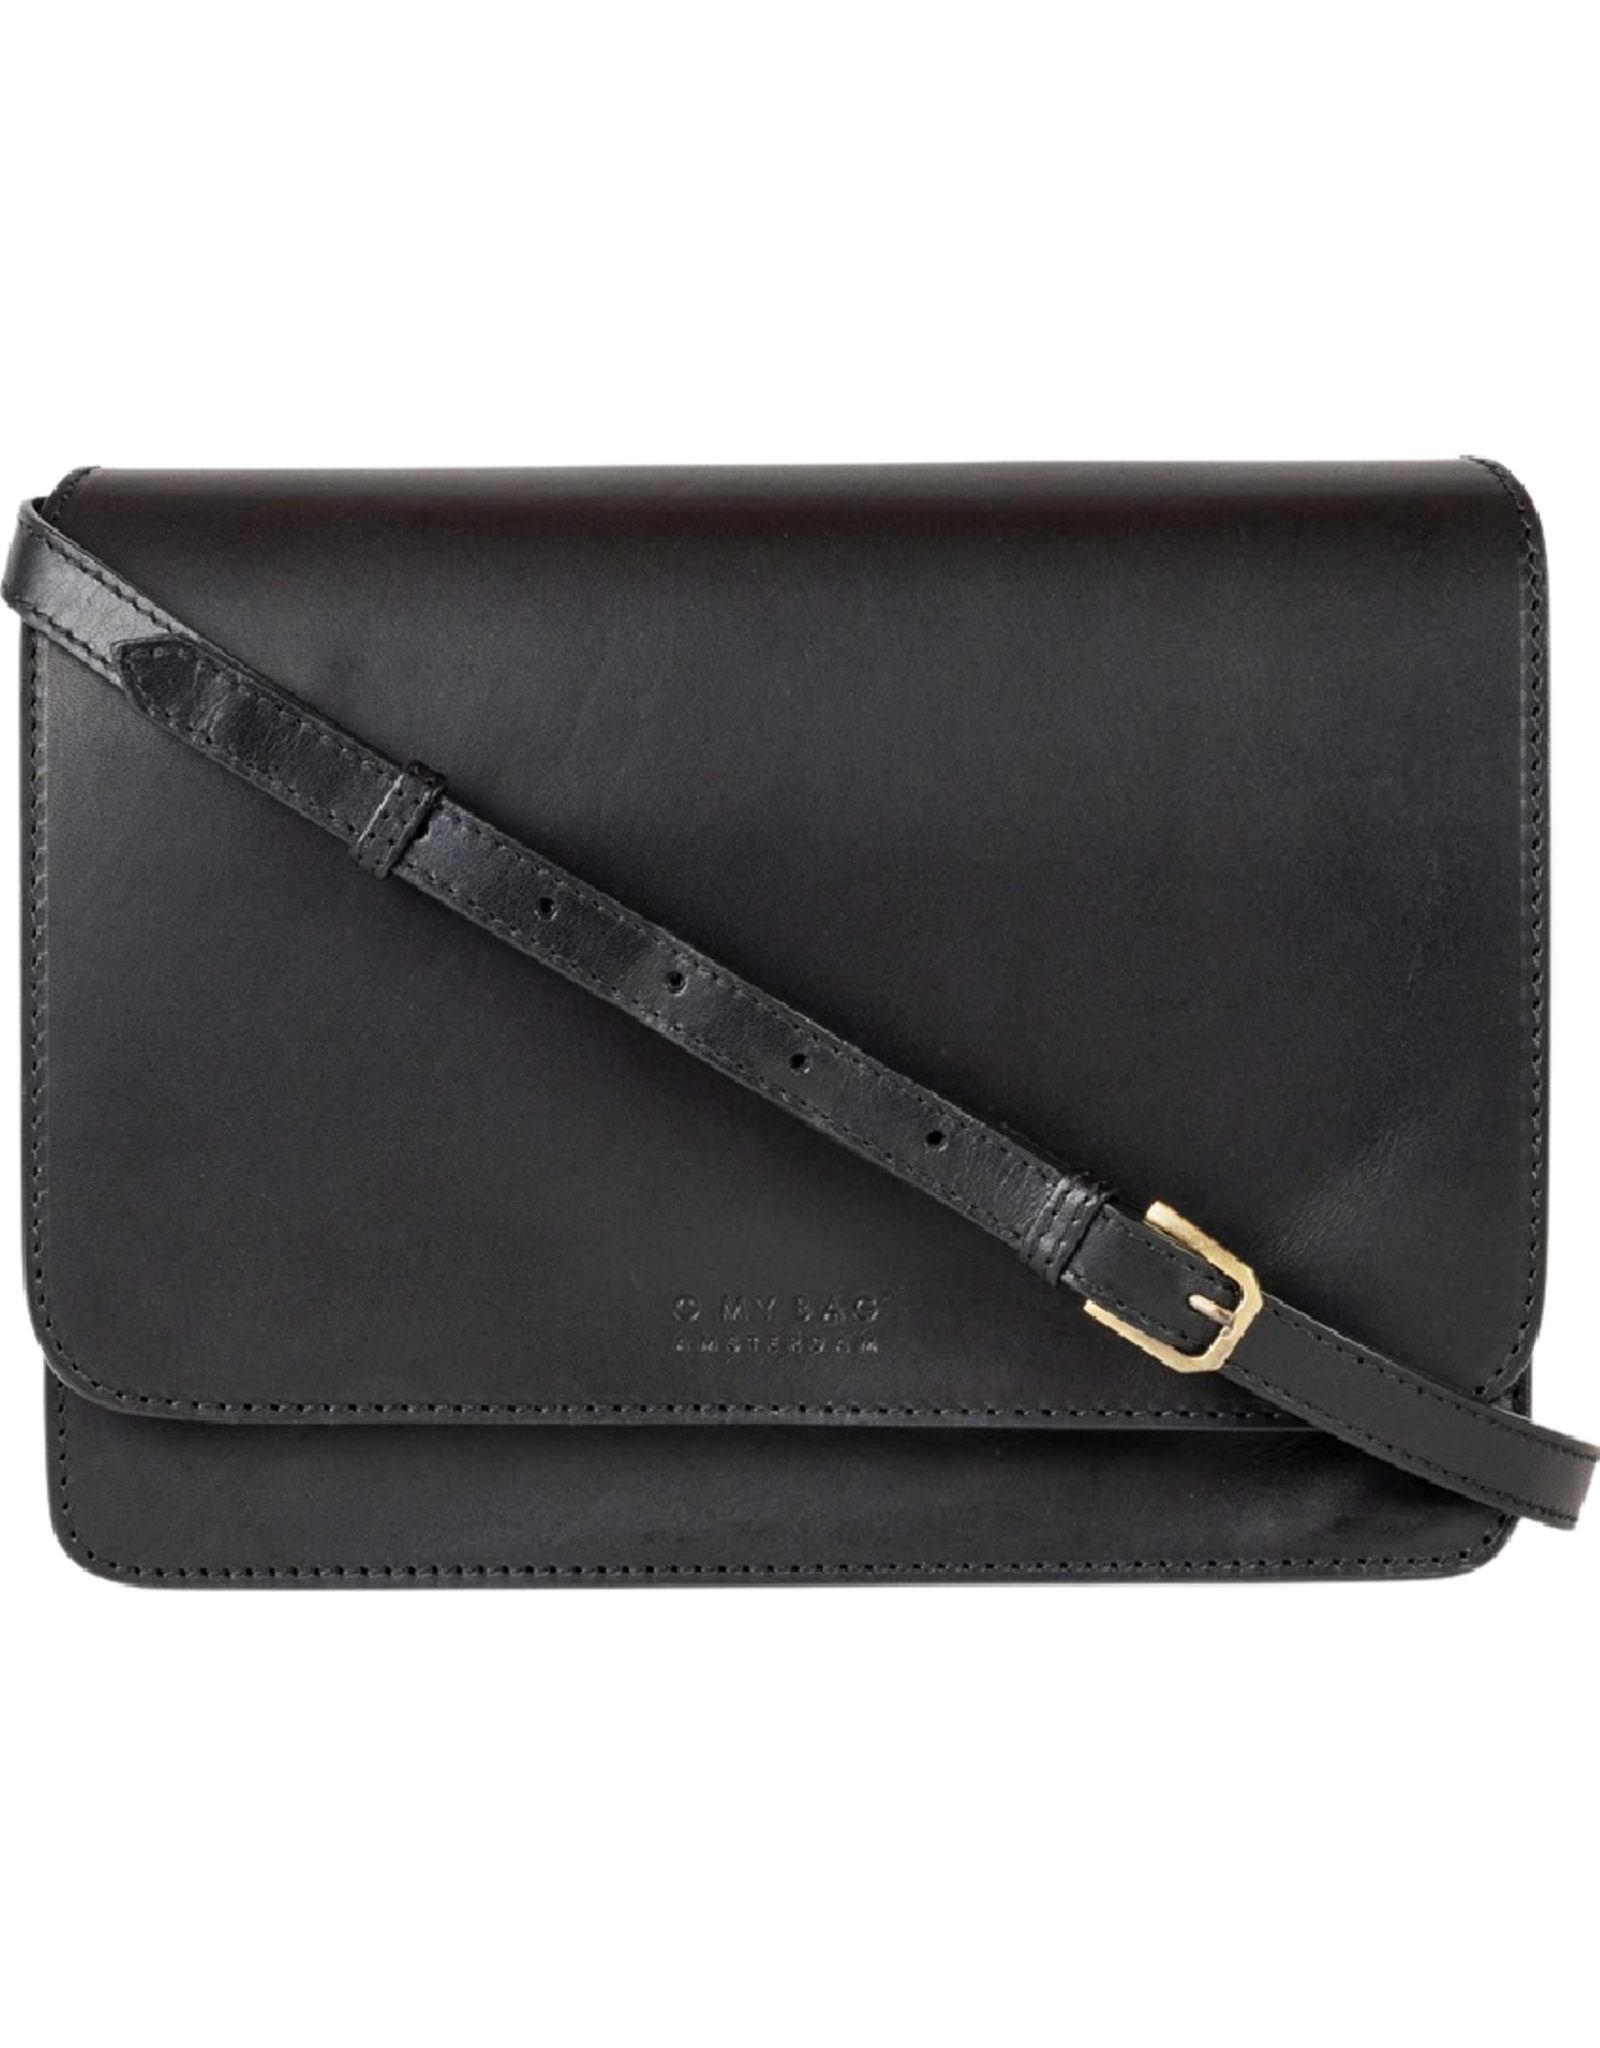 OMyBag bag 'Audrey' leather - black